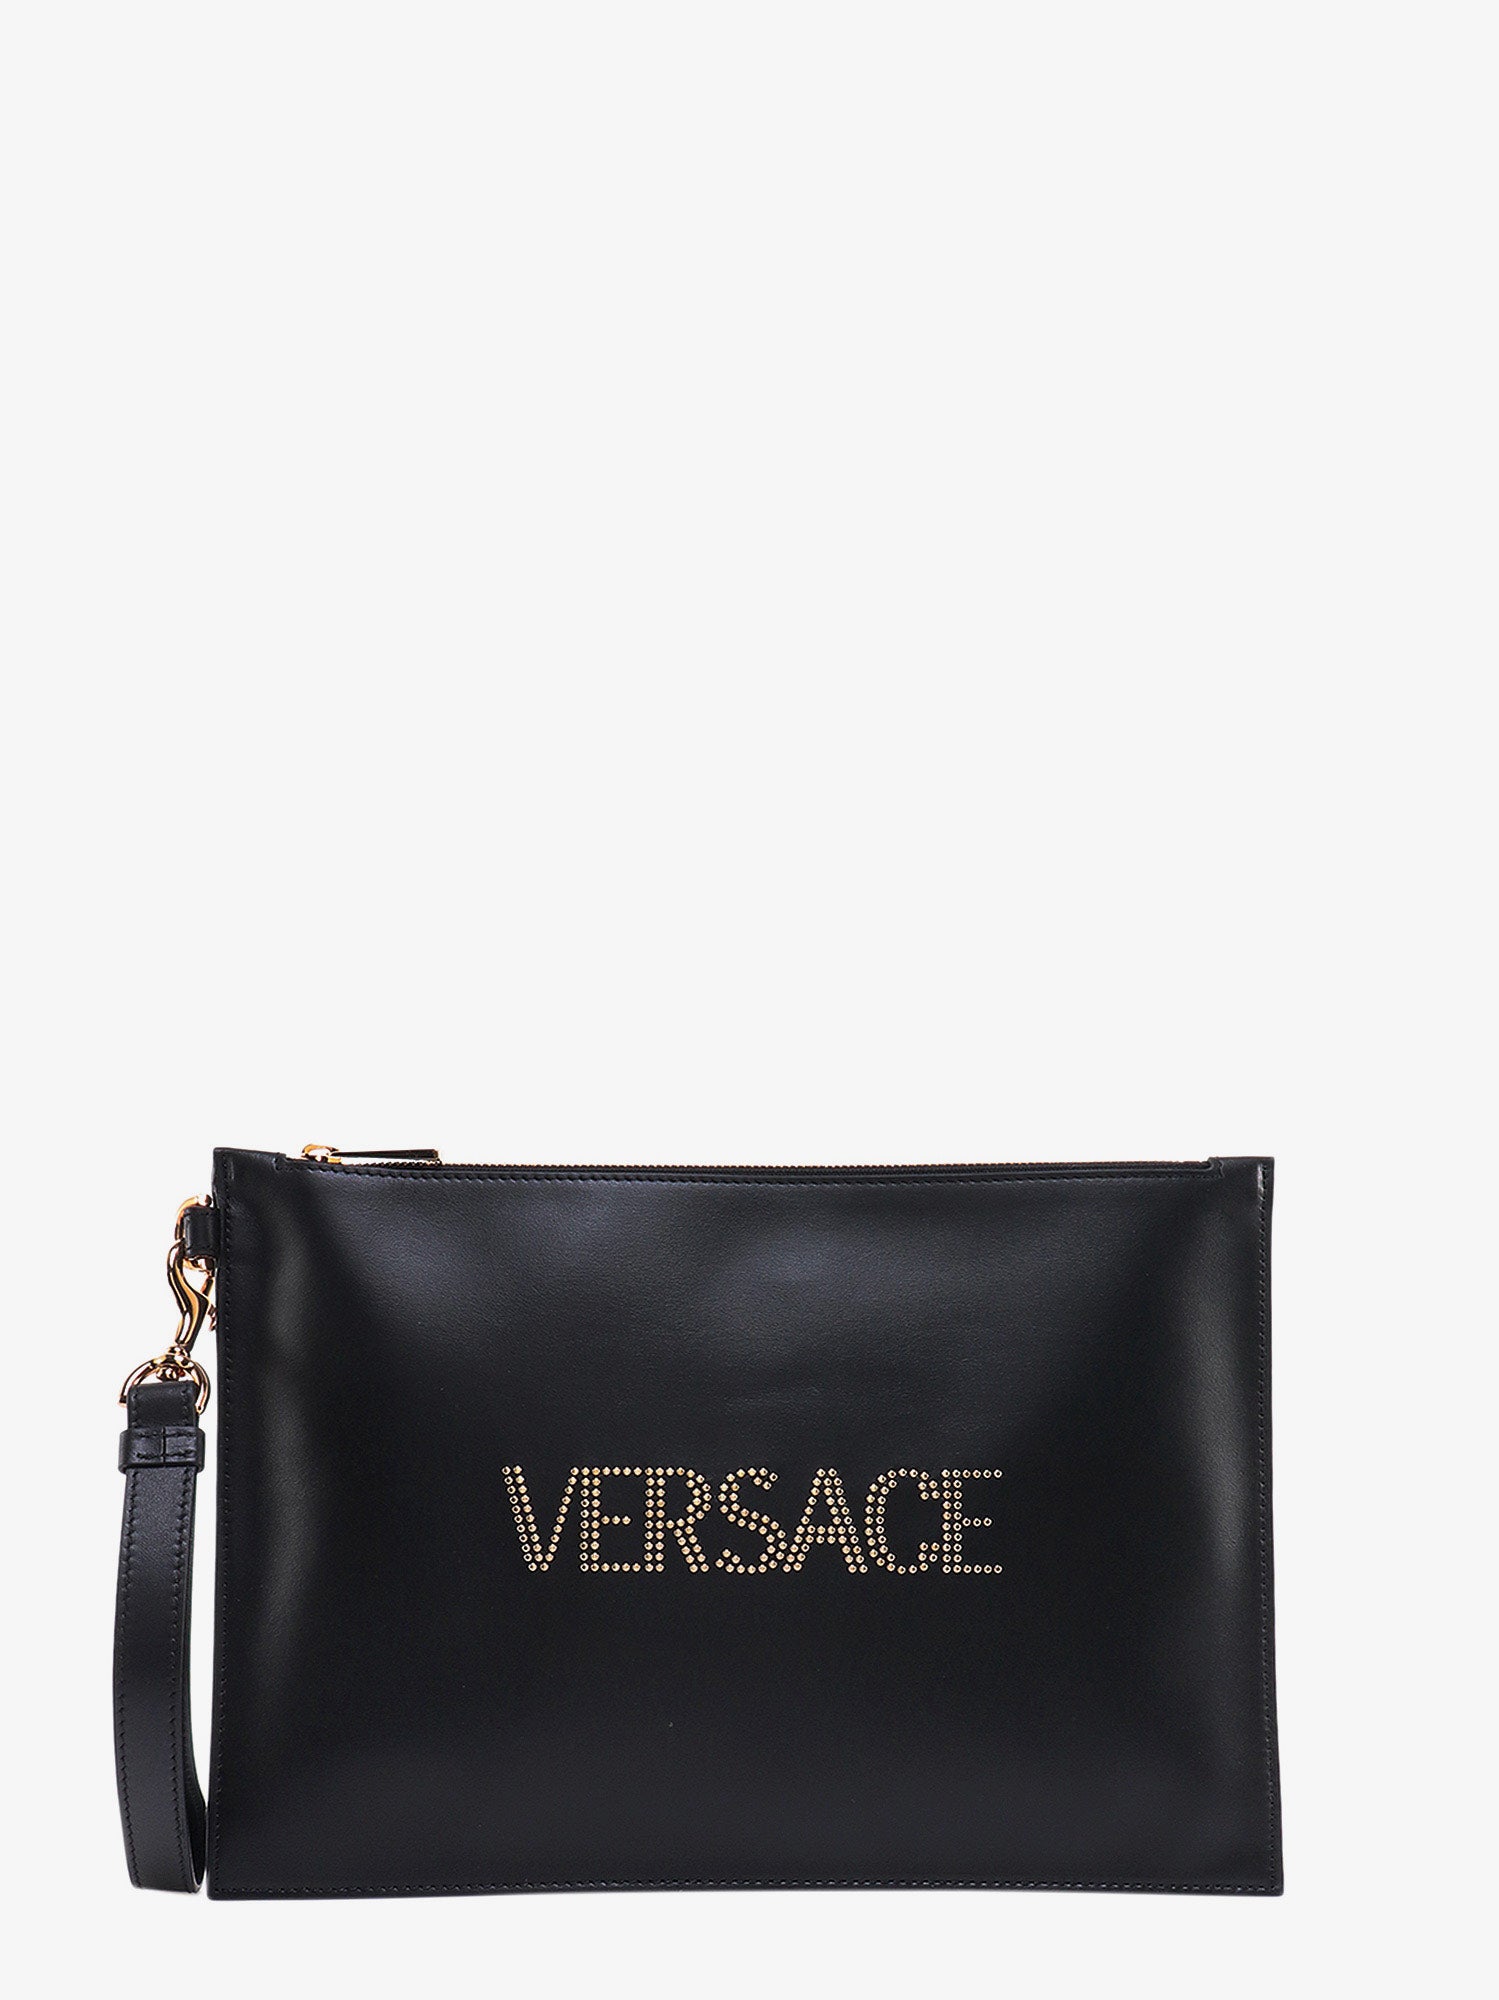 Versace Clutch In Black